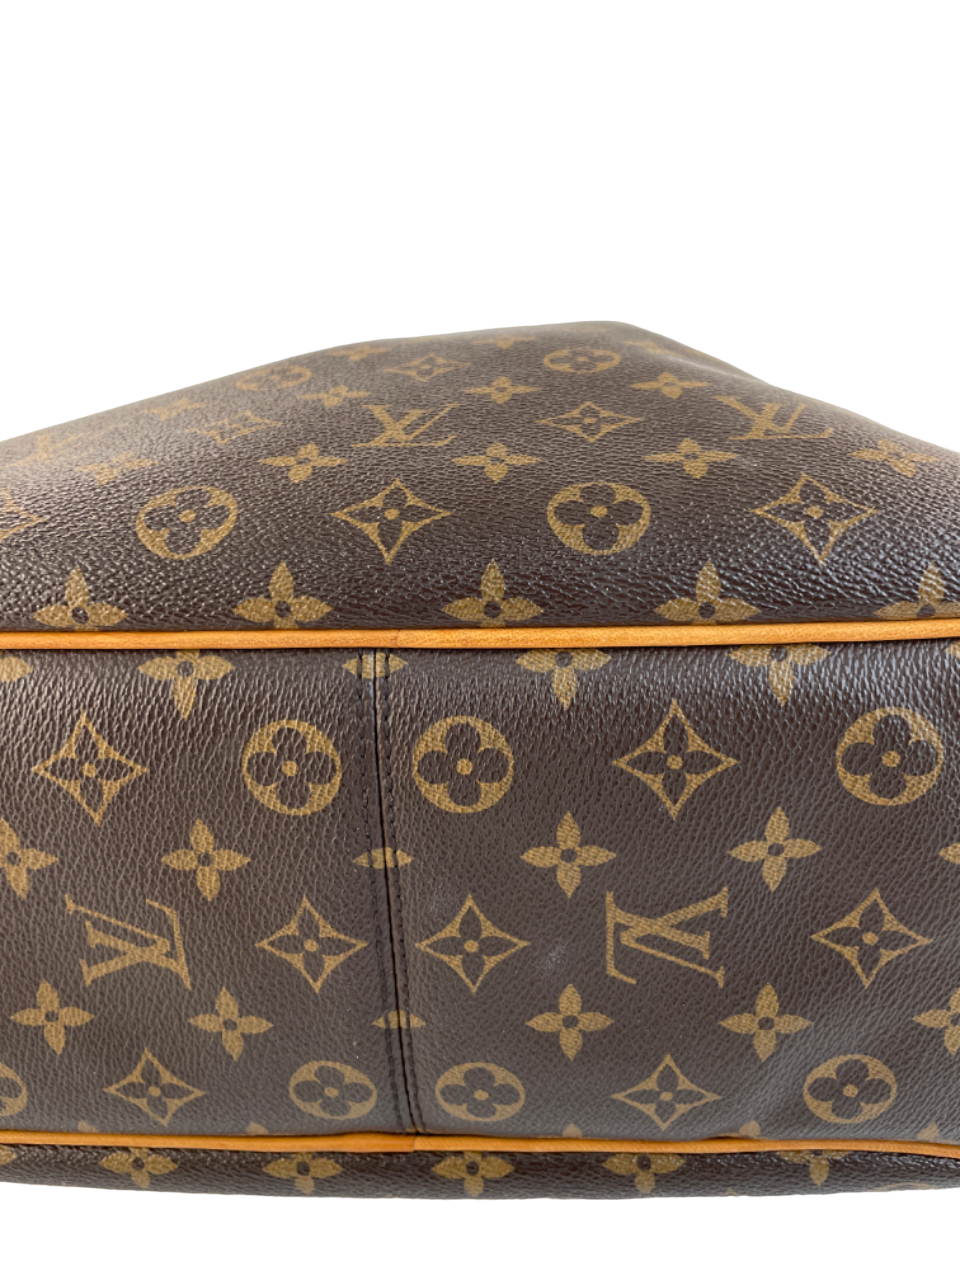 Preloved Louis Vuitton Delightful PM Monogram Bag SD4132 031523